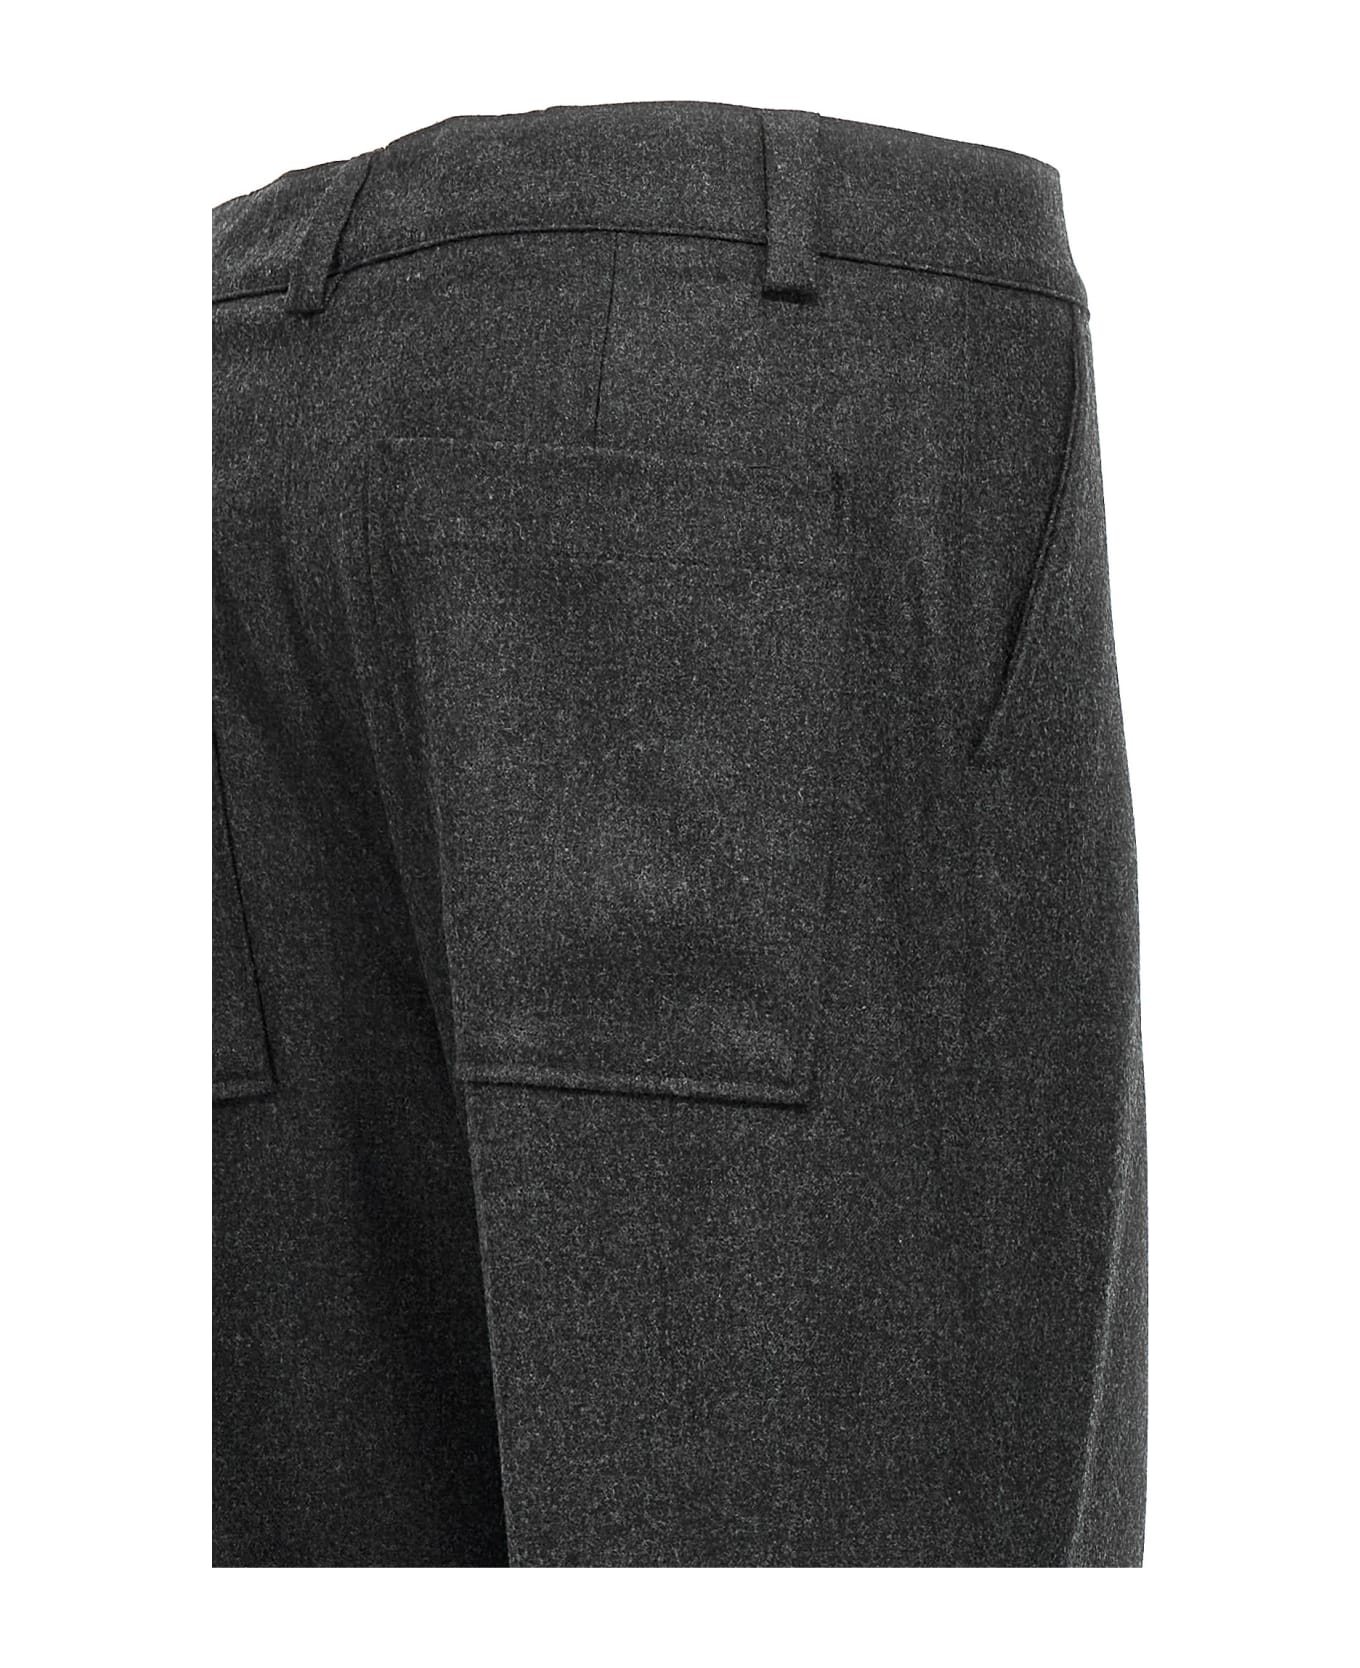 Parosh Cargo Pants - Gray